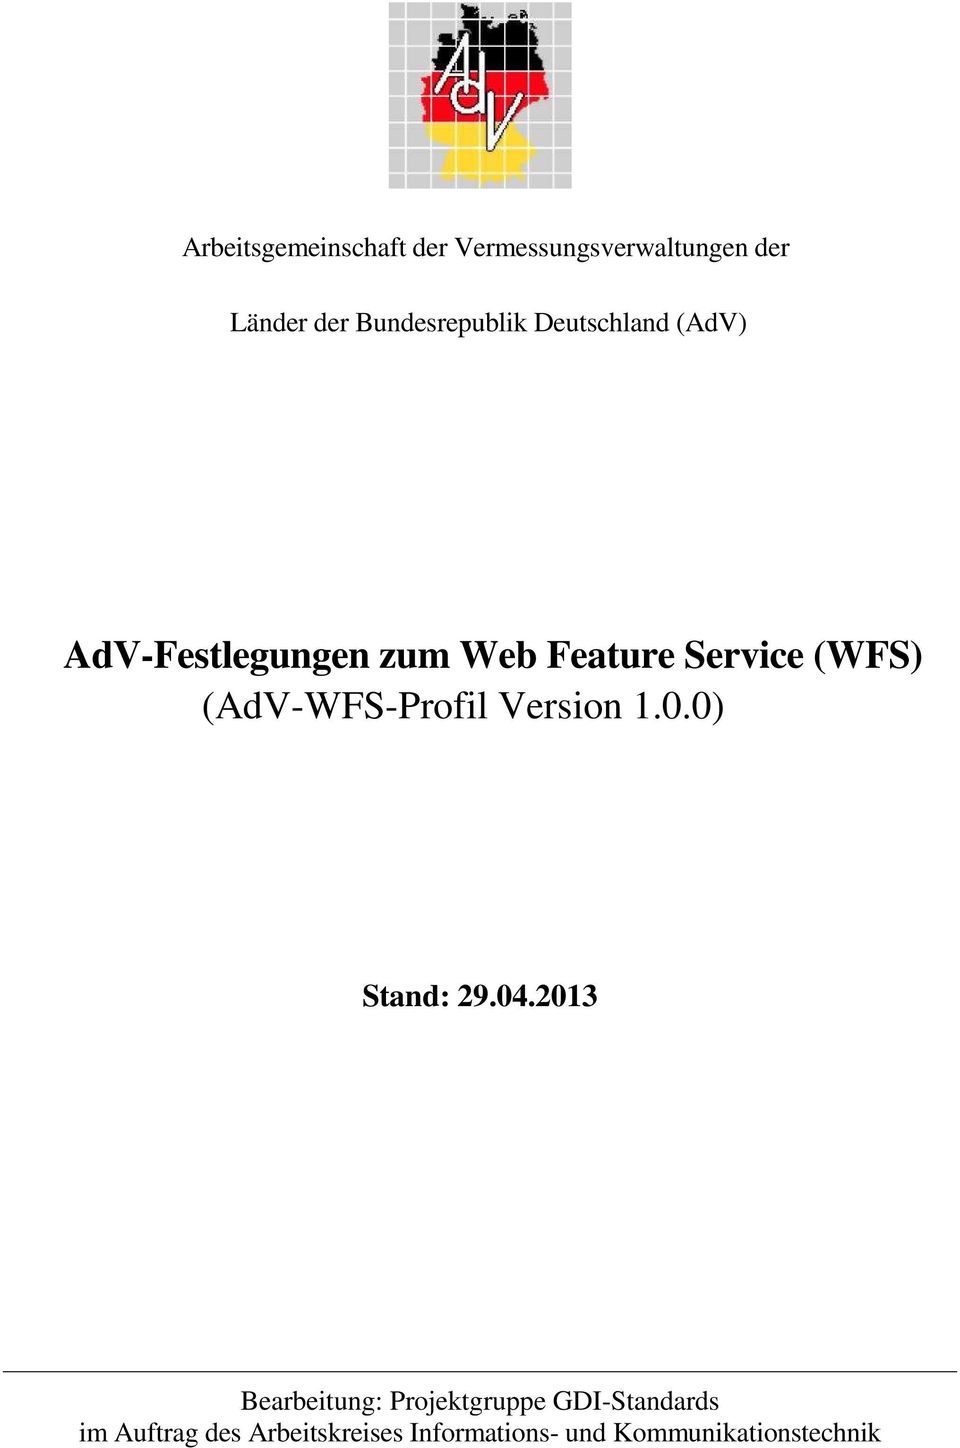 (WFS) (AdV-WFS-Profil Version 1.0.0) Stand: 29.04.